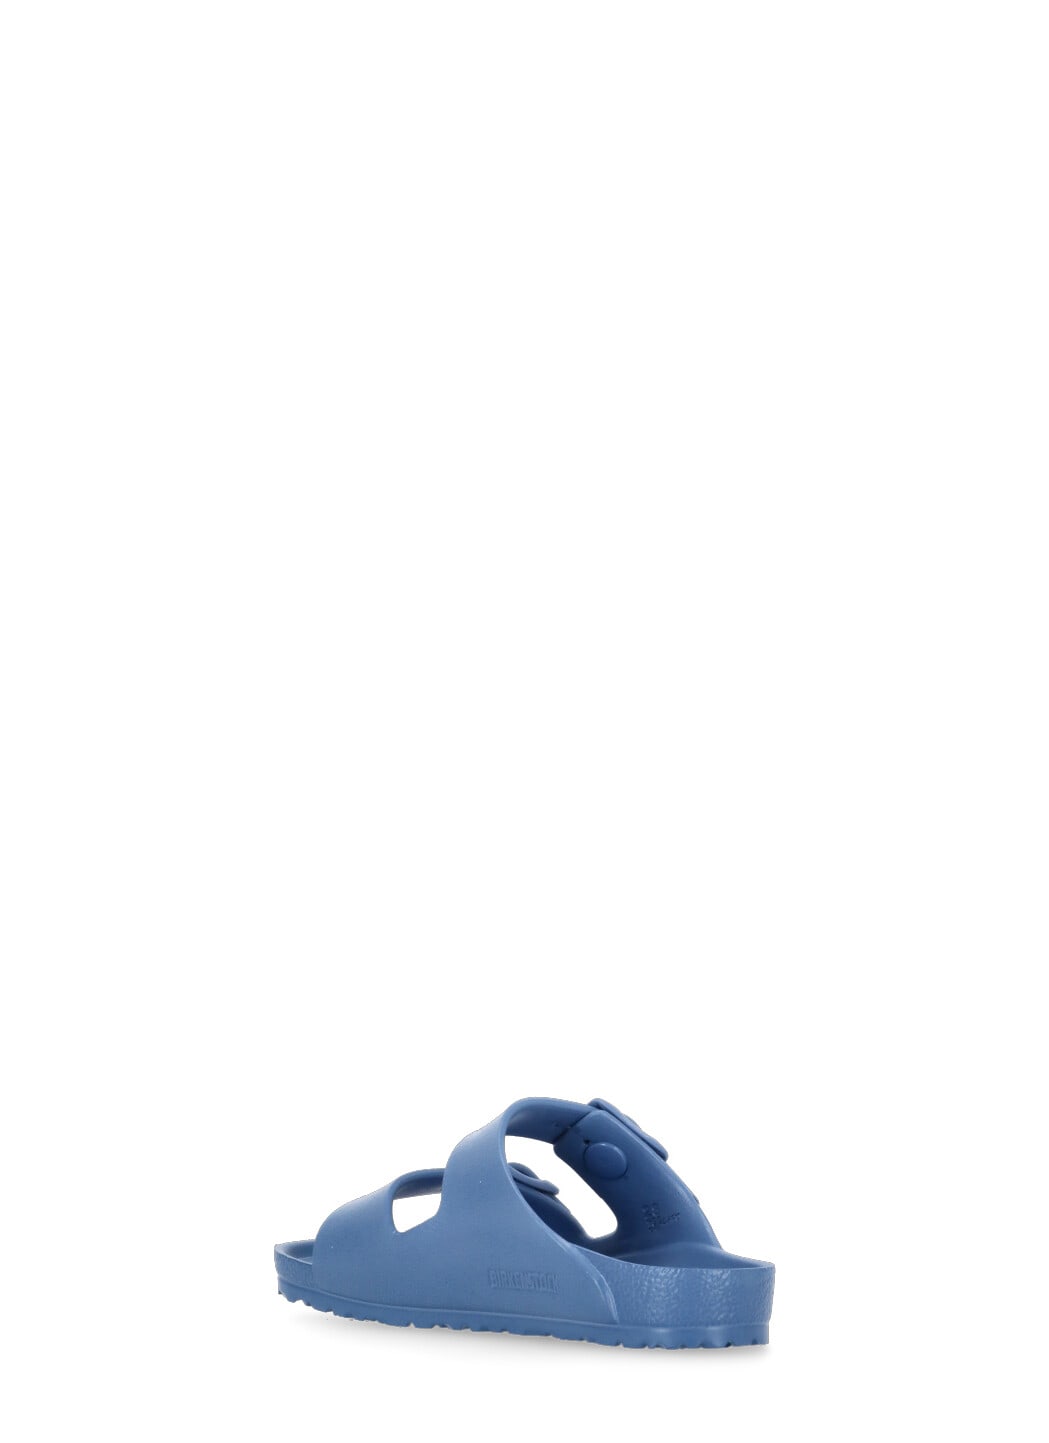 Shop Birkenstock Slipper With Buckles In Light Blue